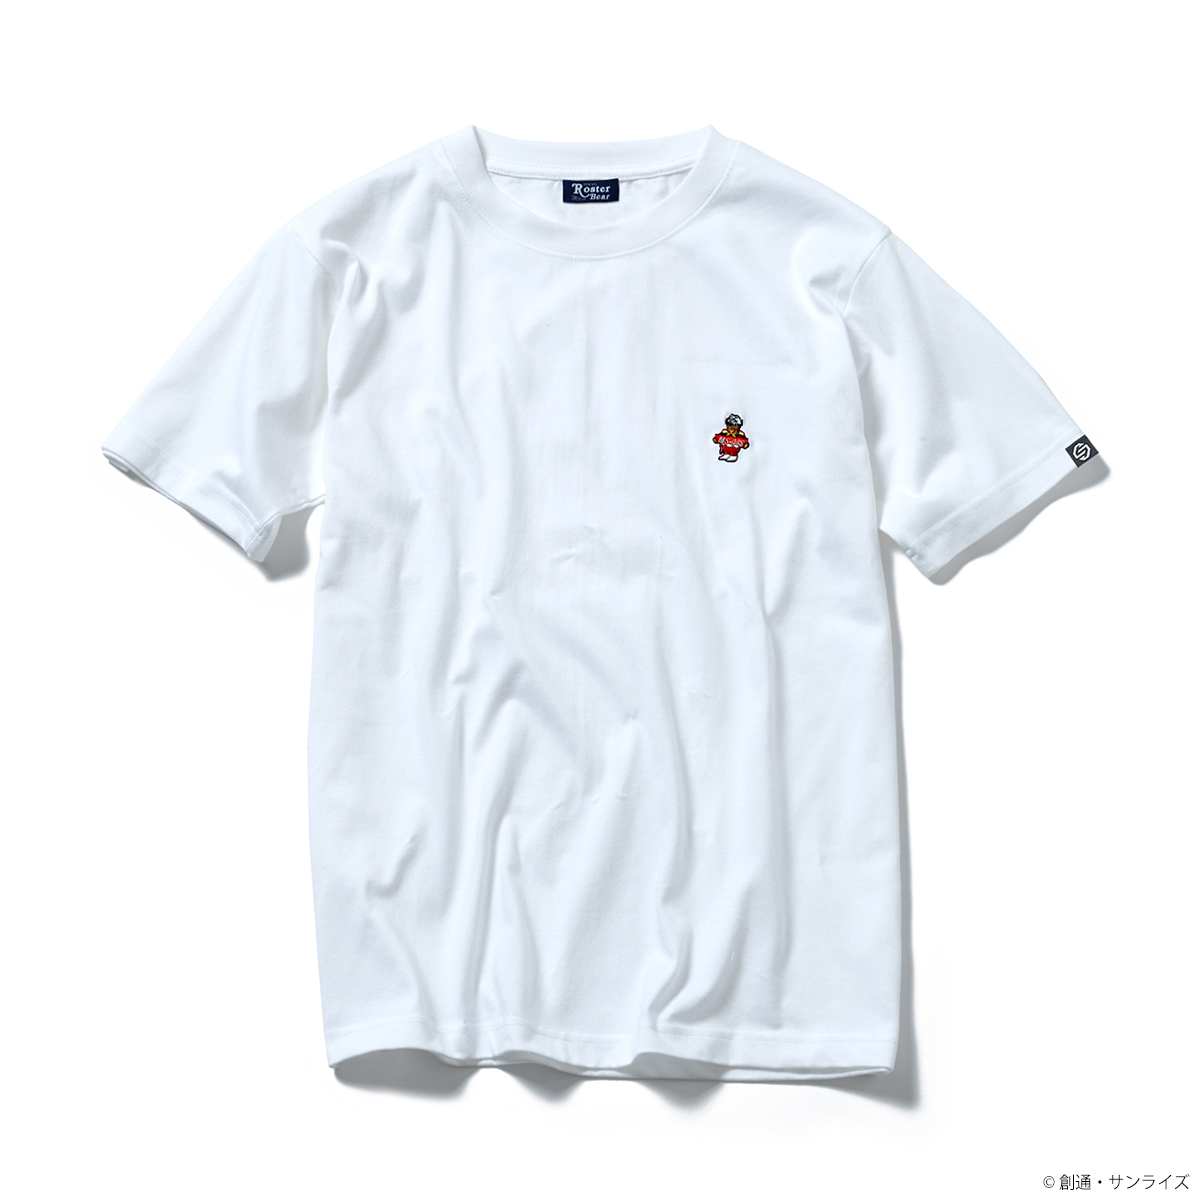 STRICT-G ROSTER BEAR『機動戦士ガンダム』 Tシャツ MS-06S